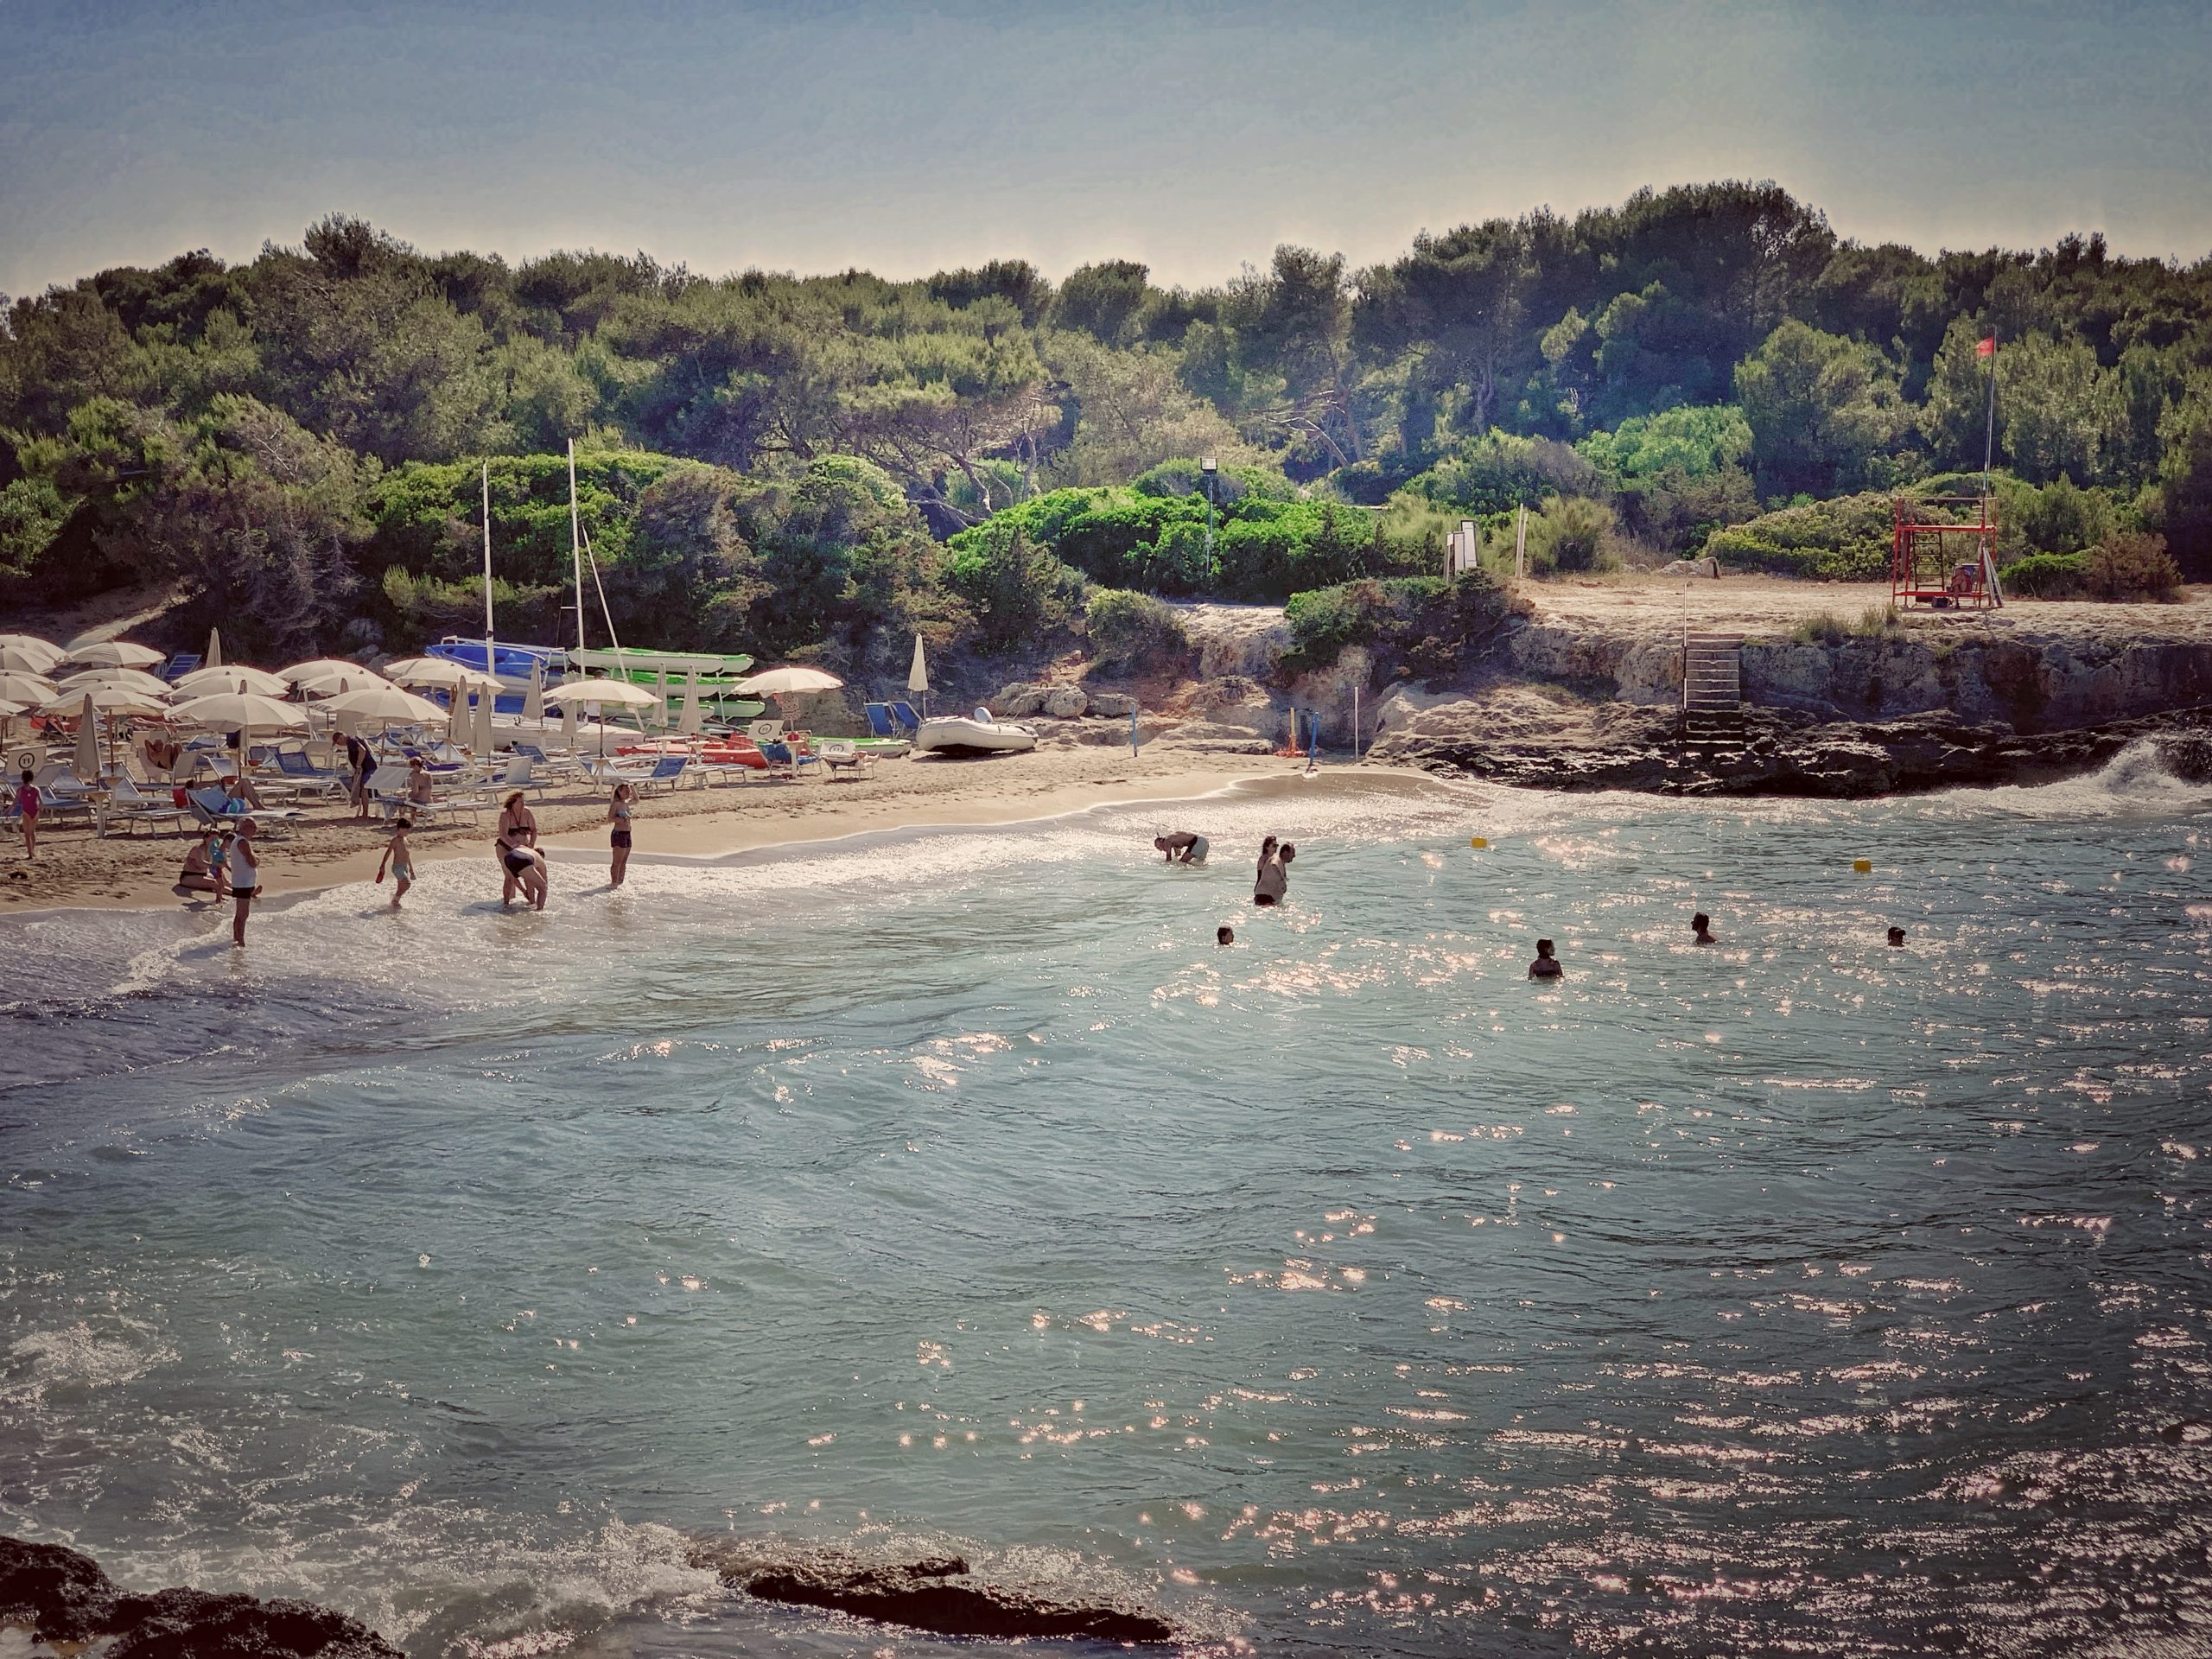 Lamaforca gay beach Ostuni, Puglia beach guide The Big Gay Podcast from Puglia